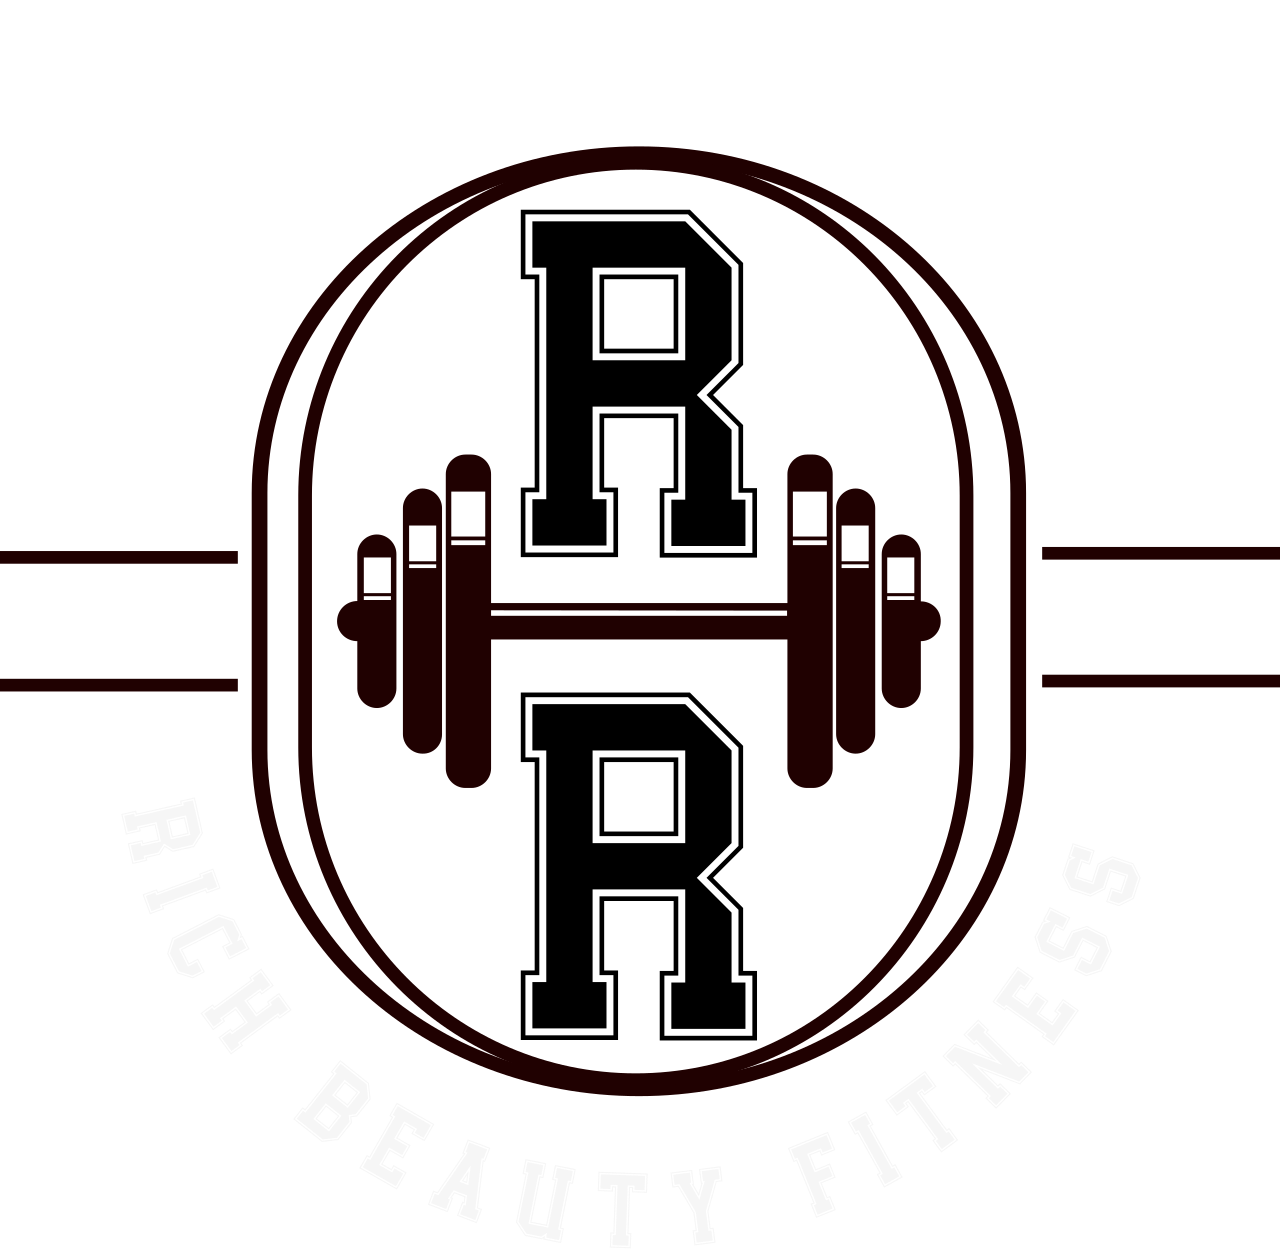 RICH Beauty Fitness 's logo